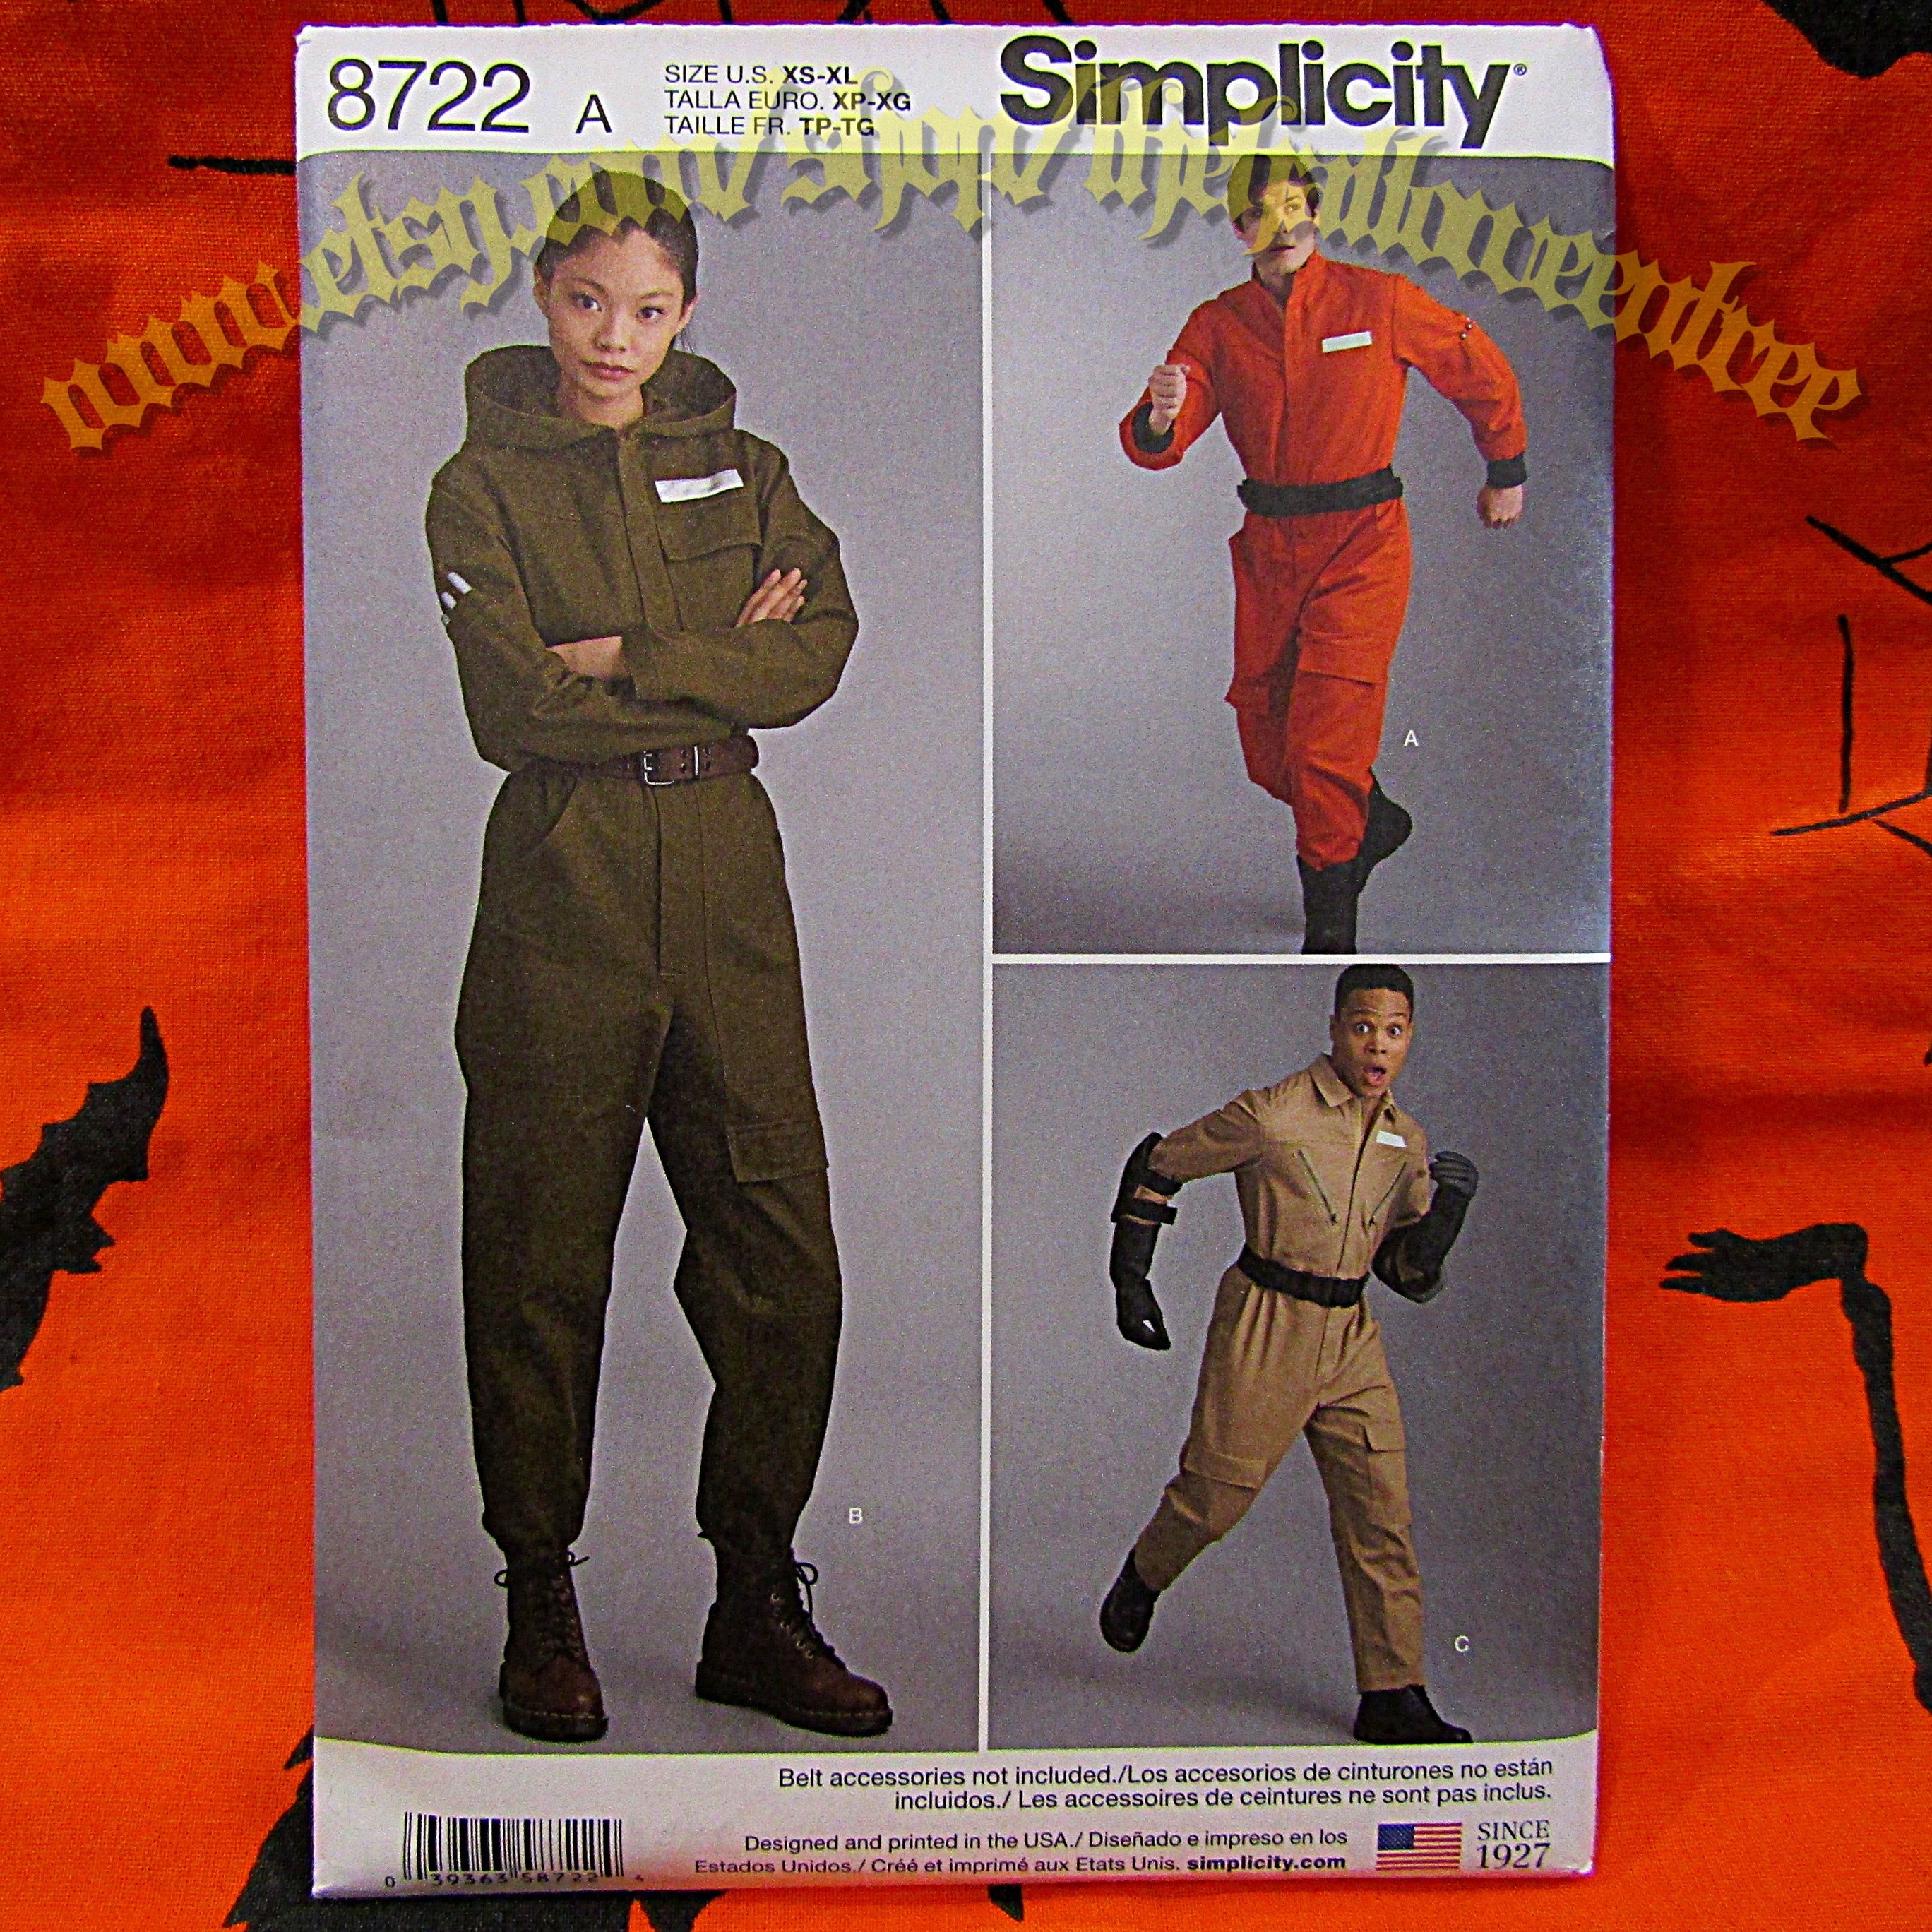 Simplicity Pattern S8528 Men's Costume Suit